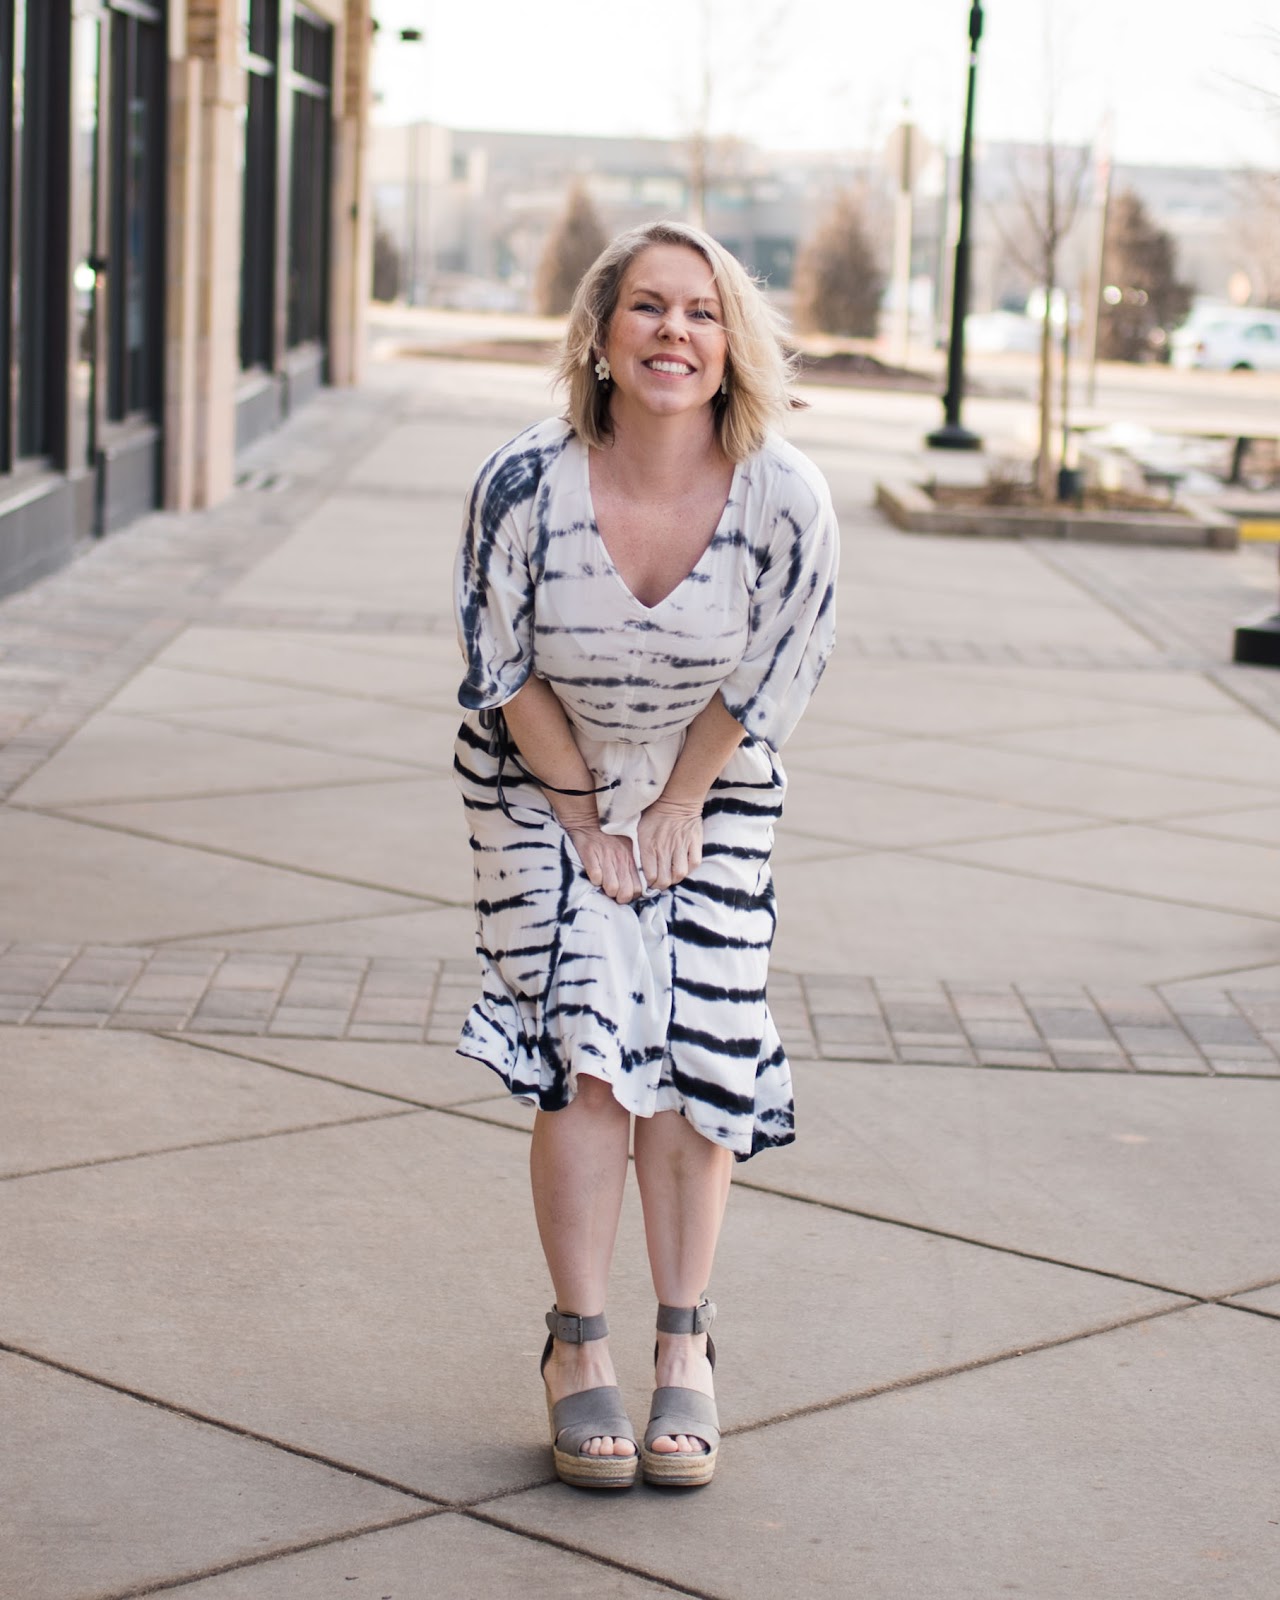 Smiling Amanda in a white striped dress on a city sidewalk.